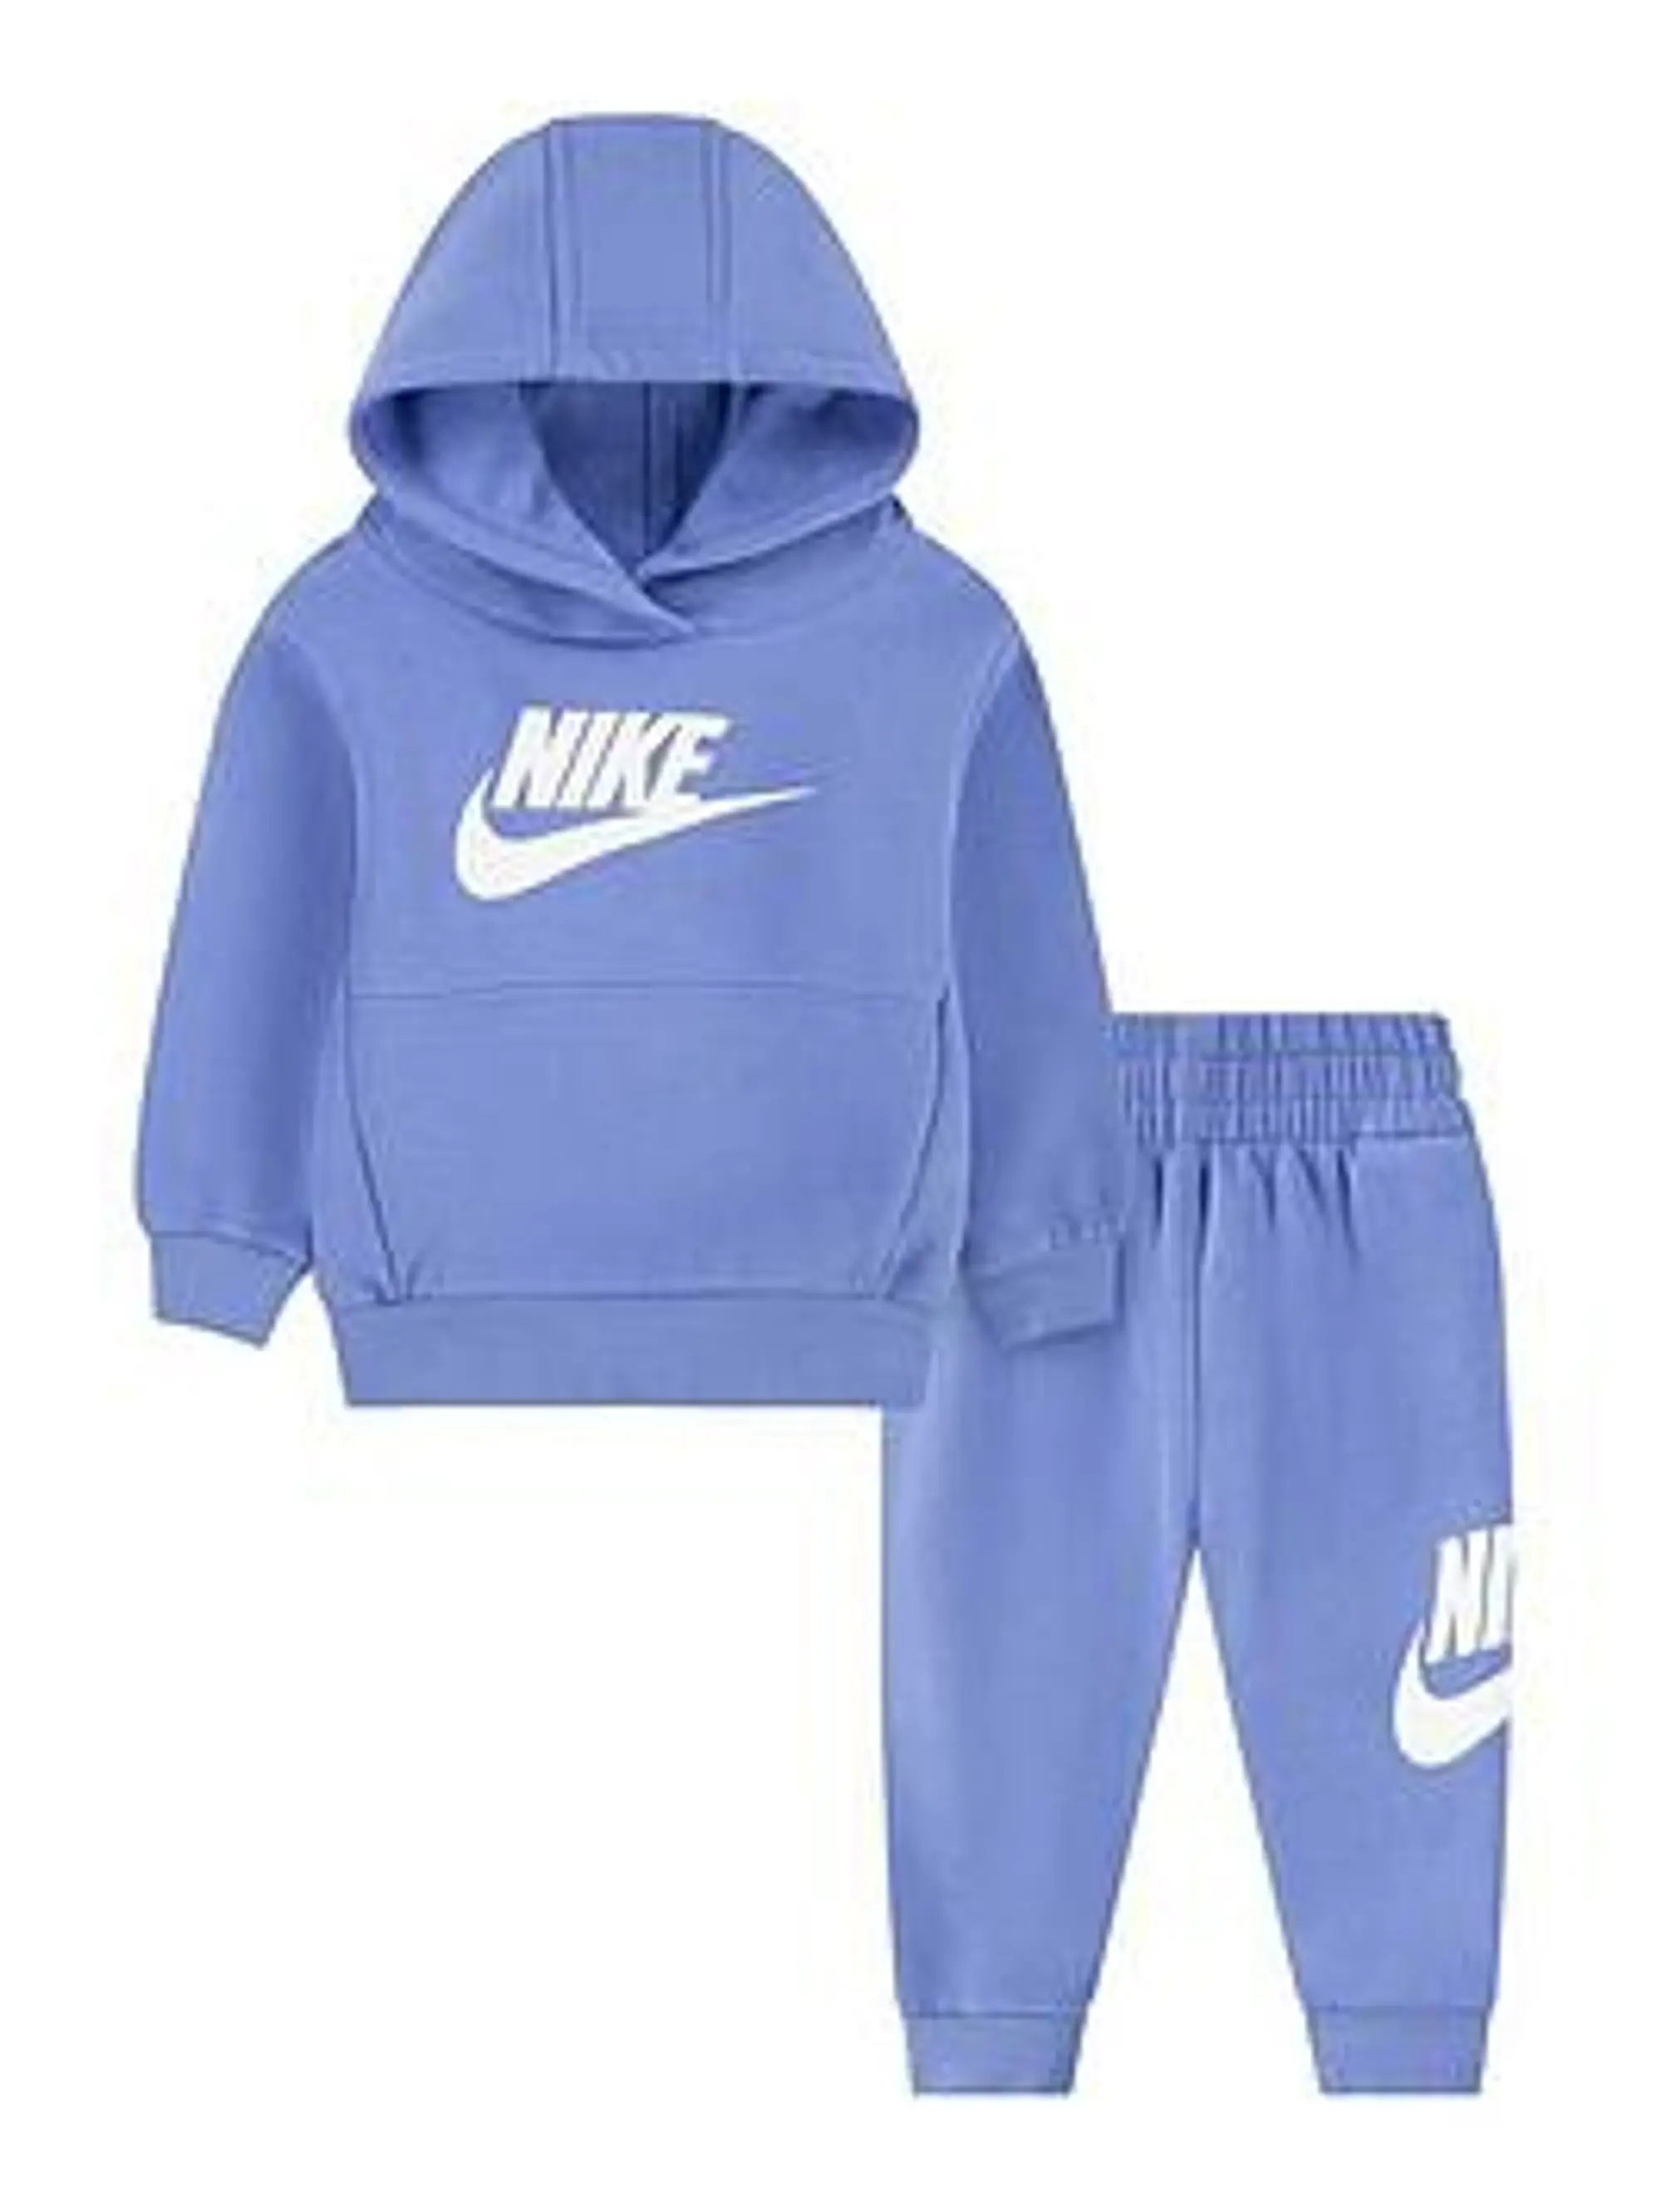 Nike Kids 66l135 Fleece Set  24 Months -